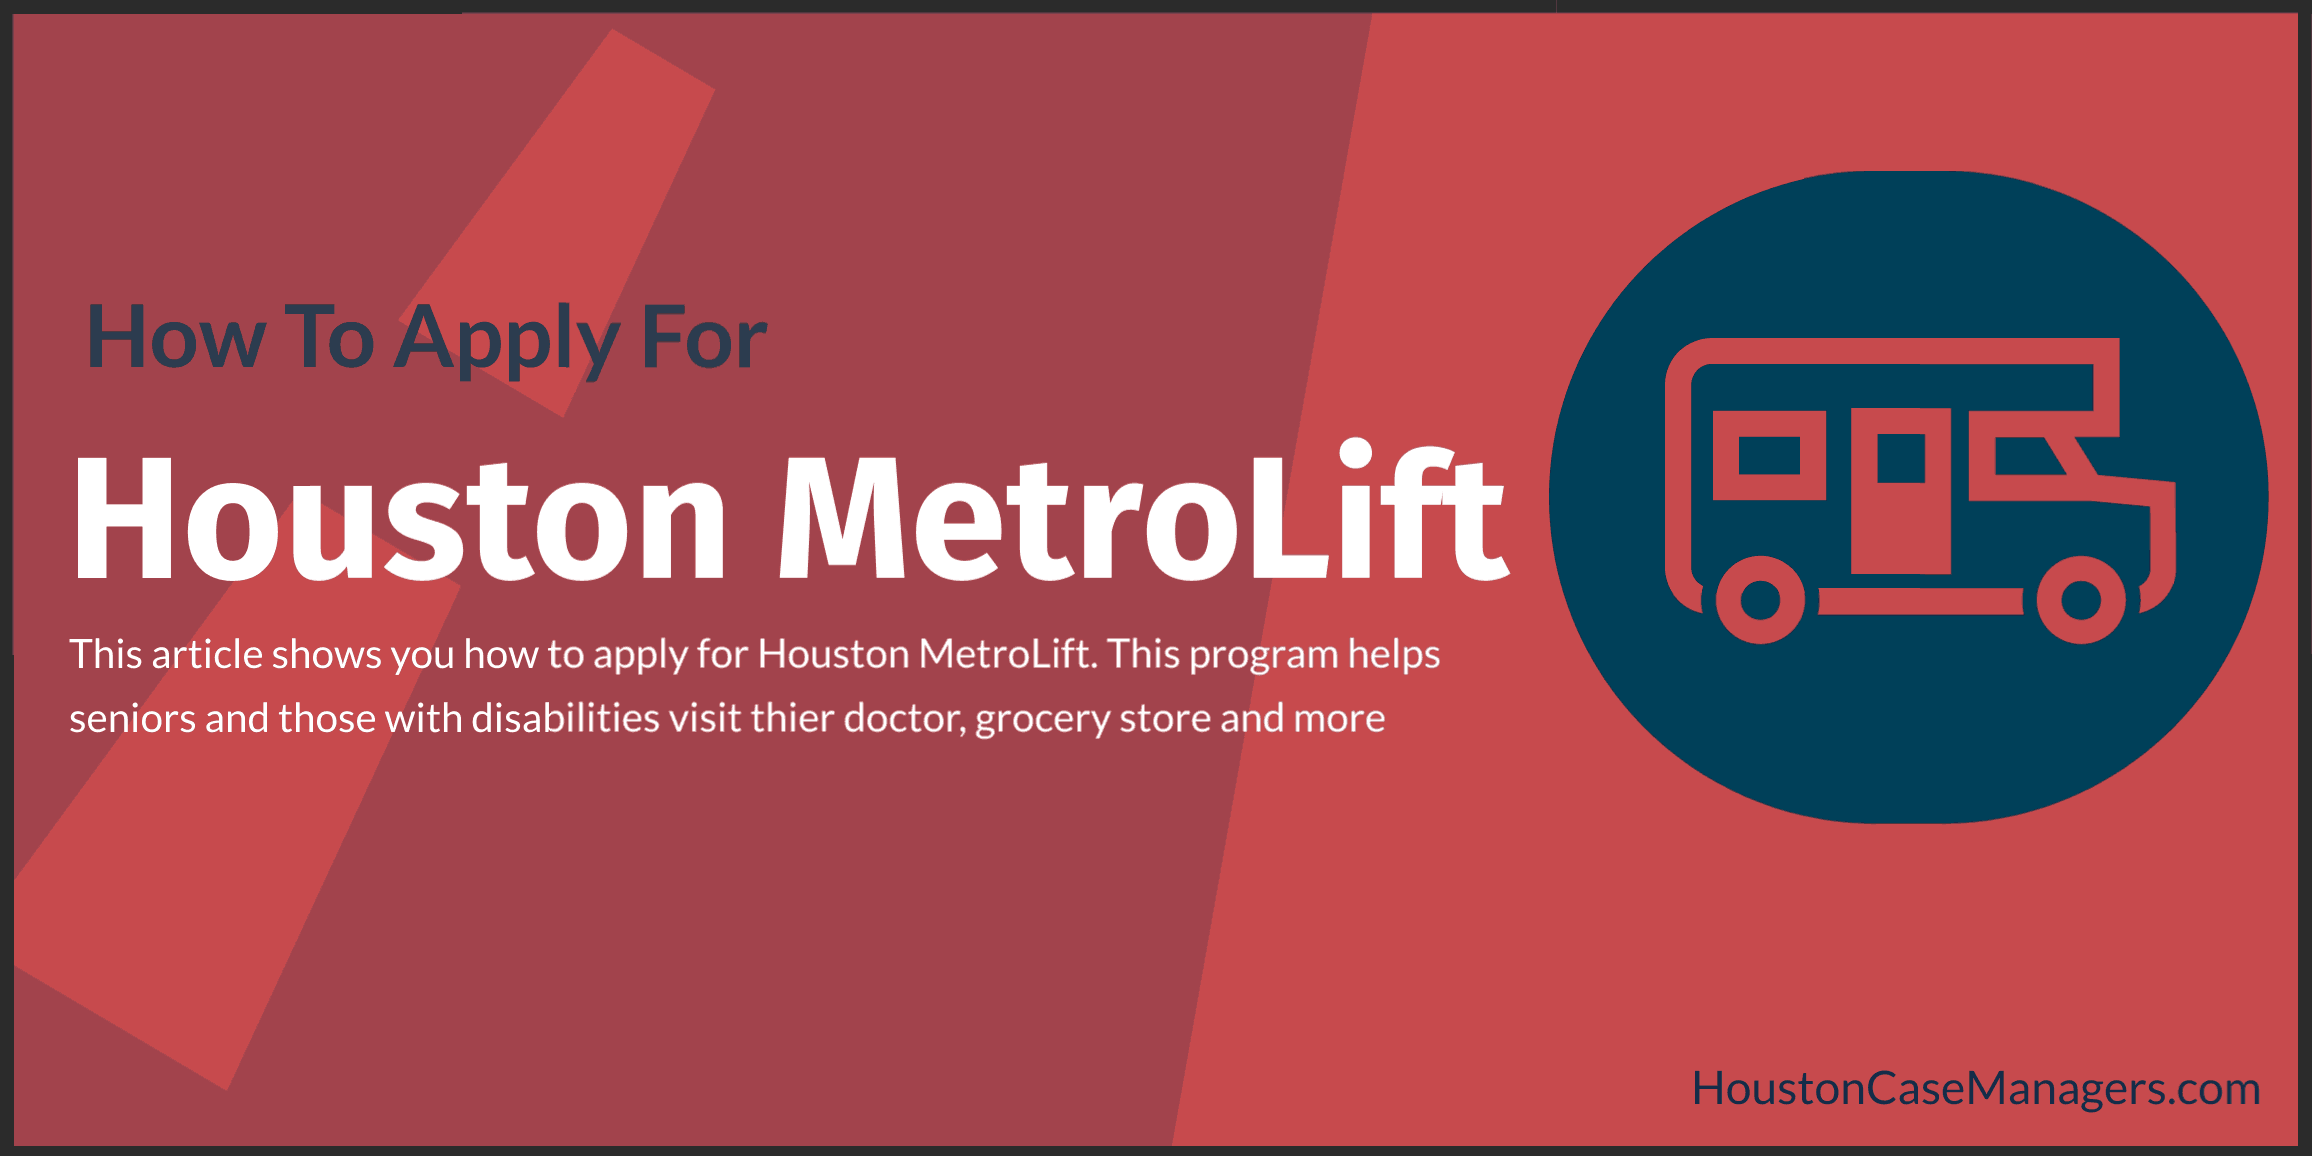 Houston MetroLift